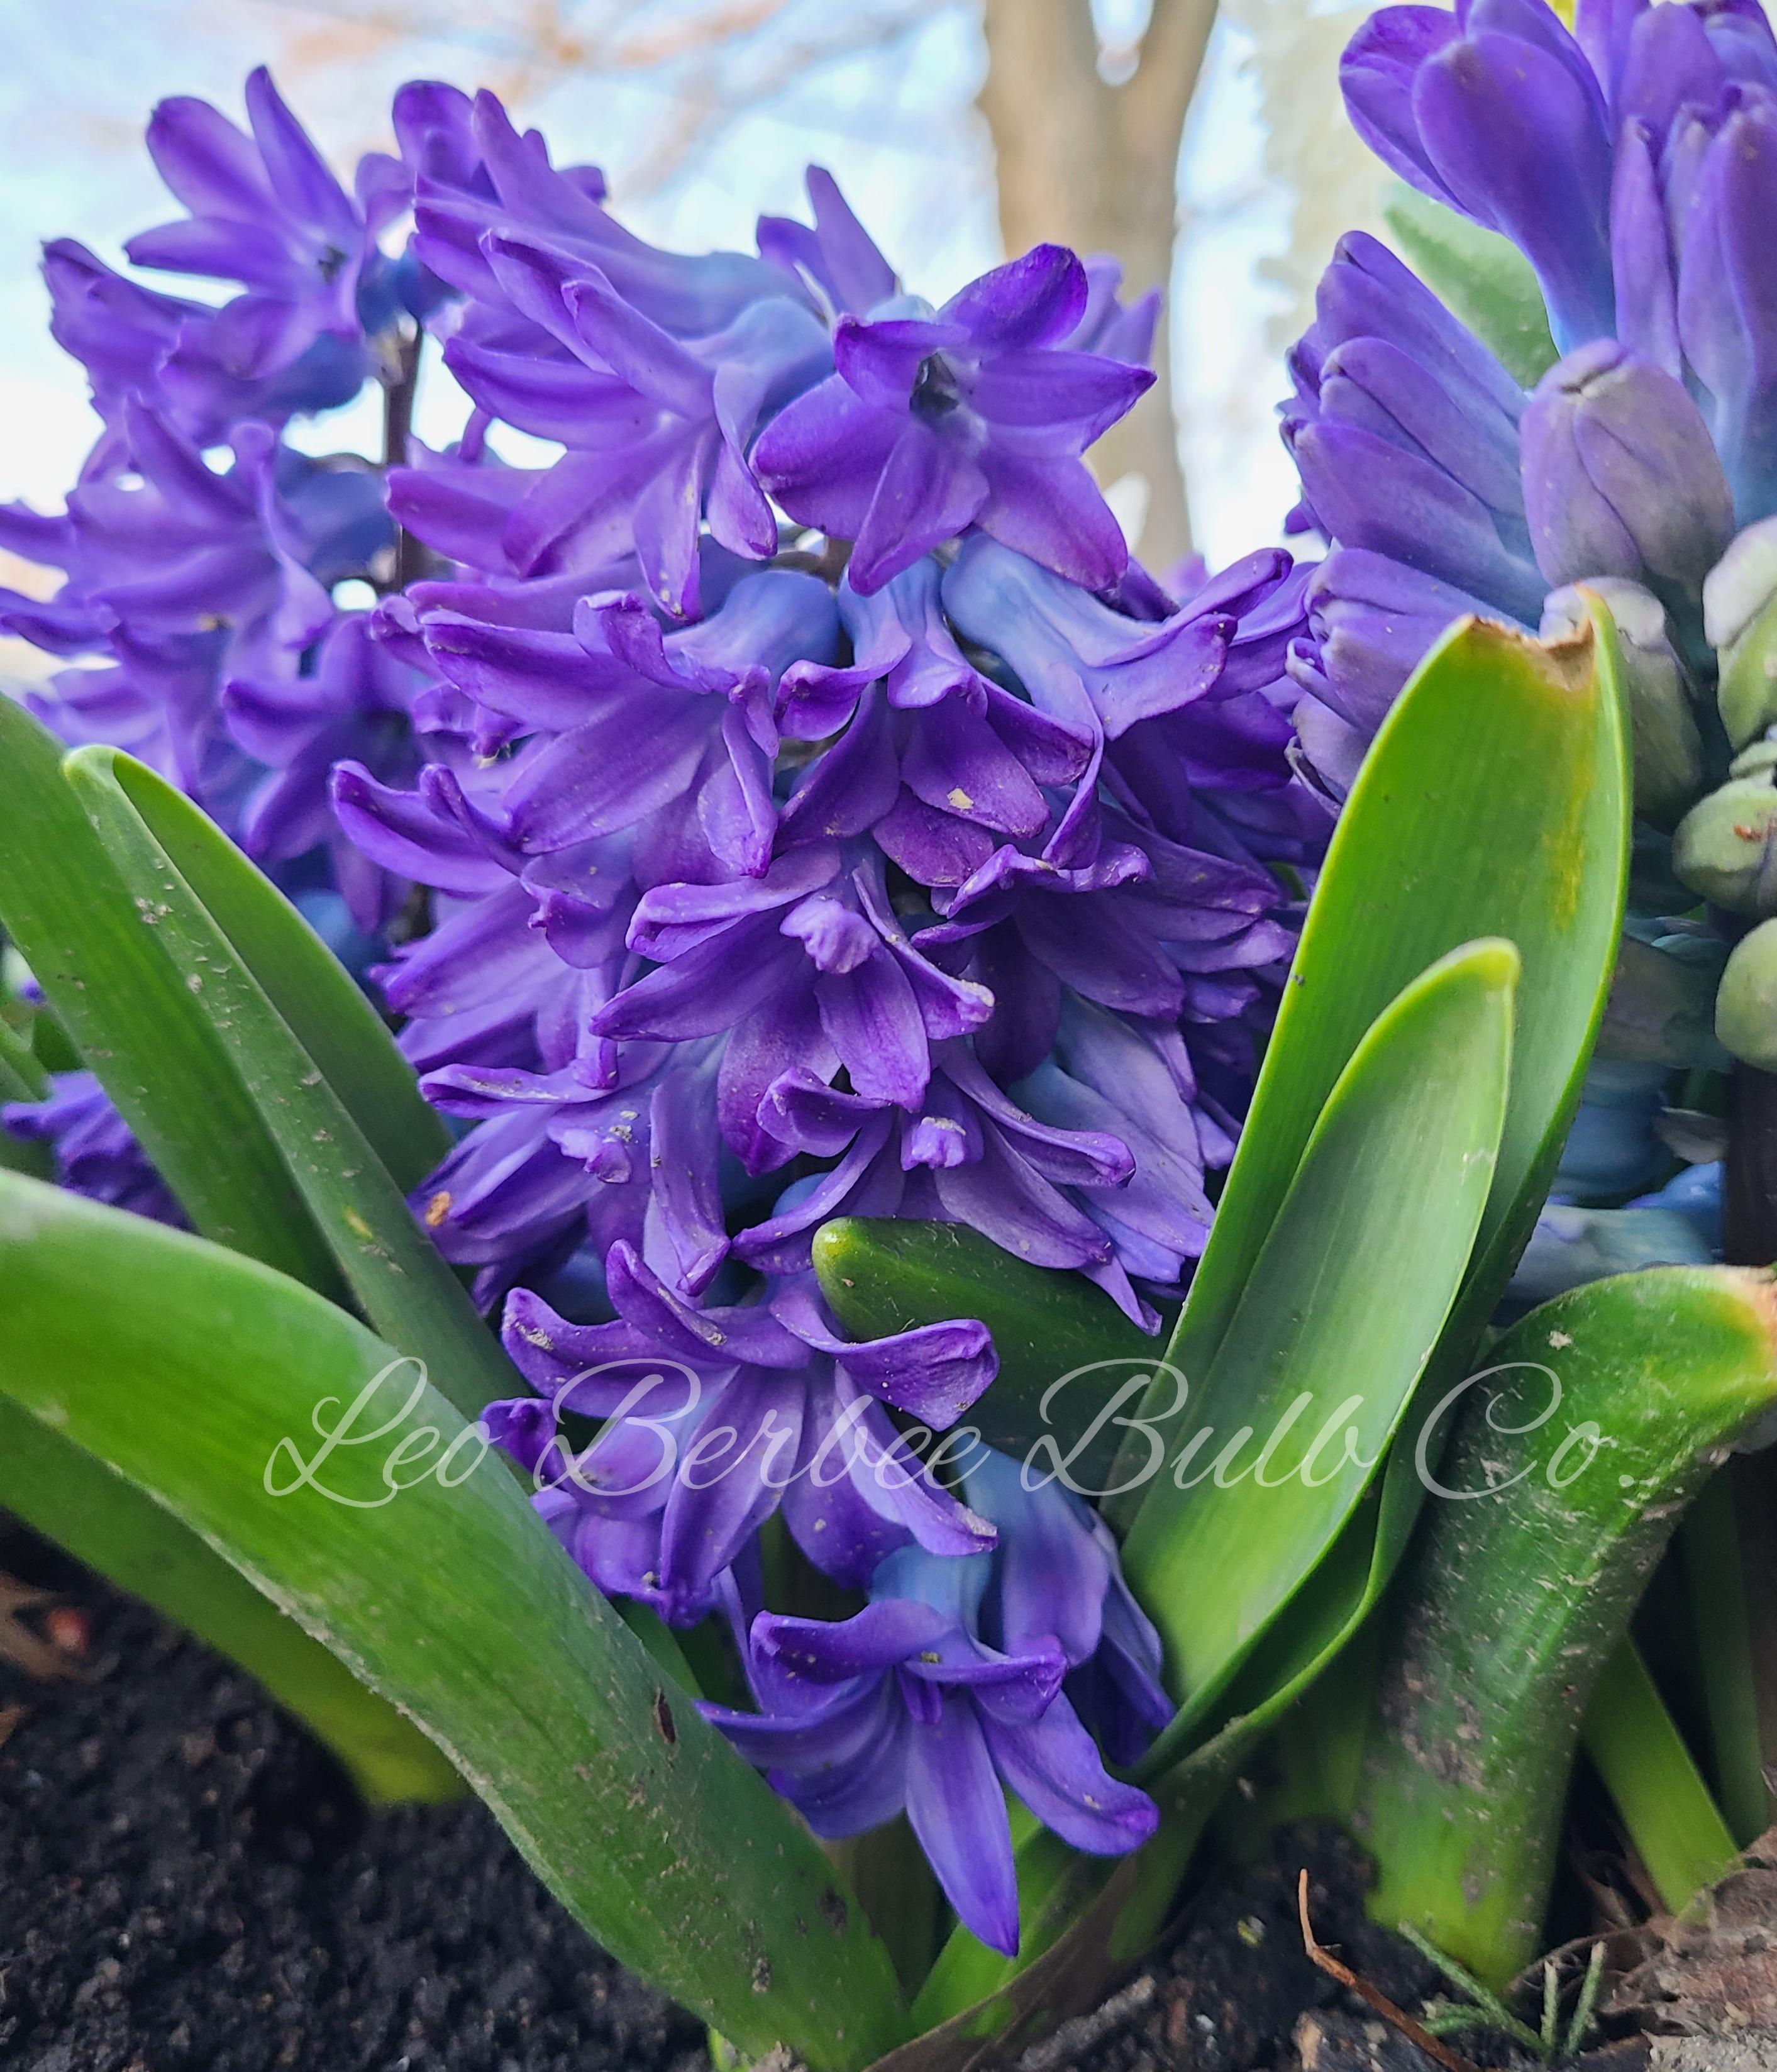 Hyacinth 'Aqua' - Hyacinth - Coming Soon for Fall 2022! from Leo Berbee Bulb Company